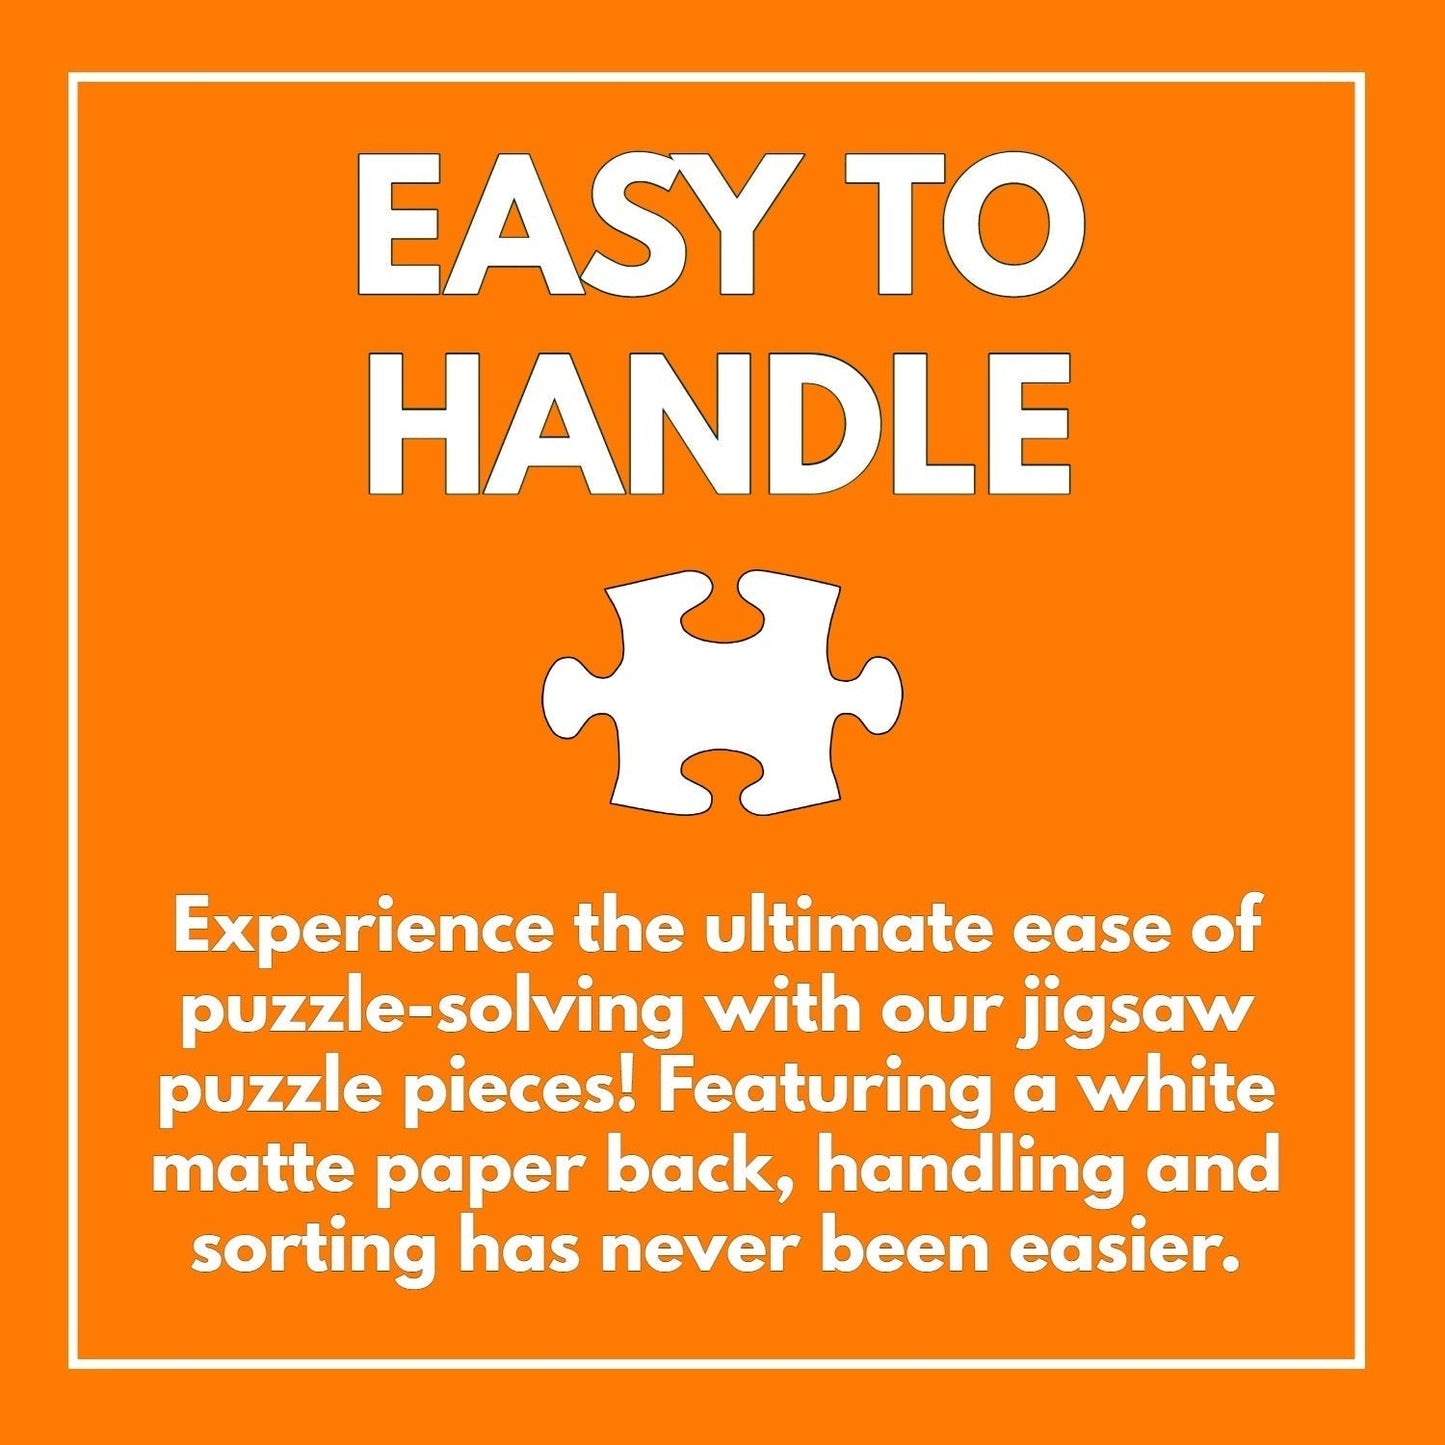 Macaron Palette Parade - 1000 Piece Jigsaw Puzzle